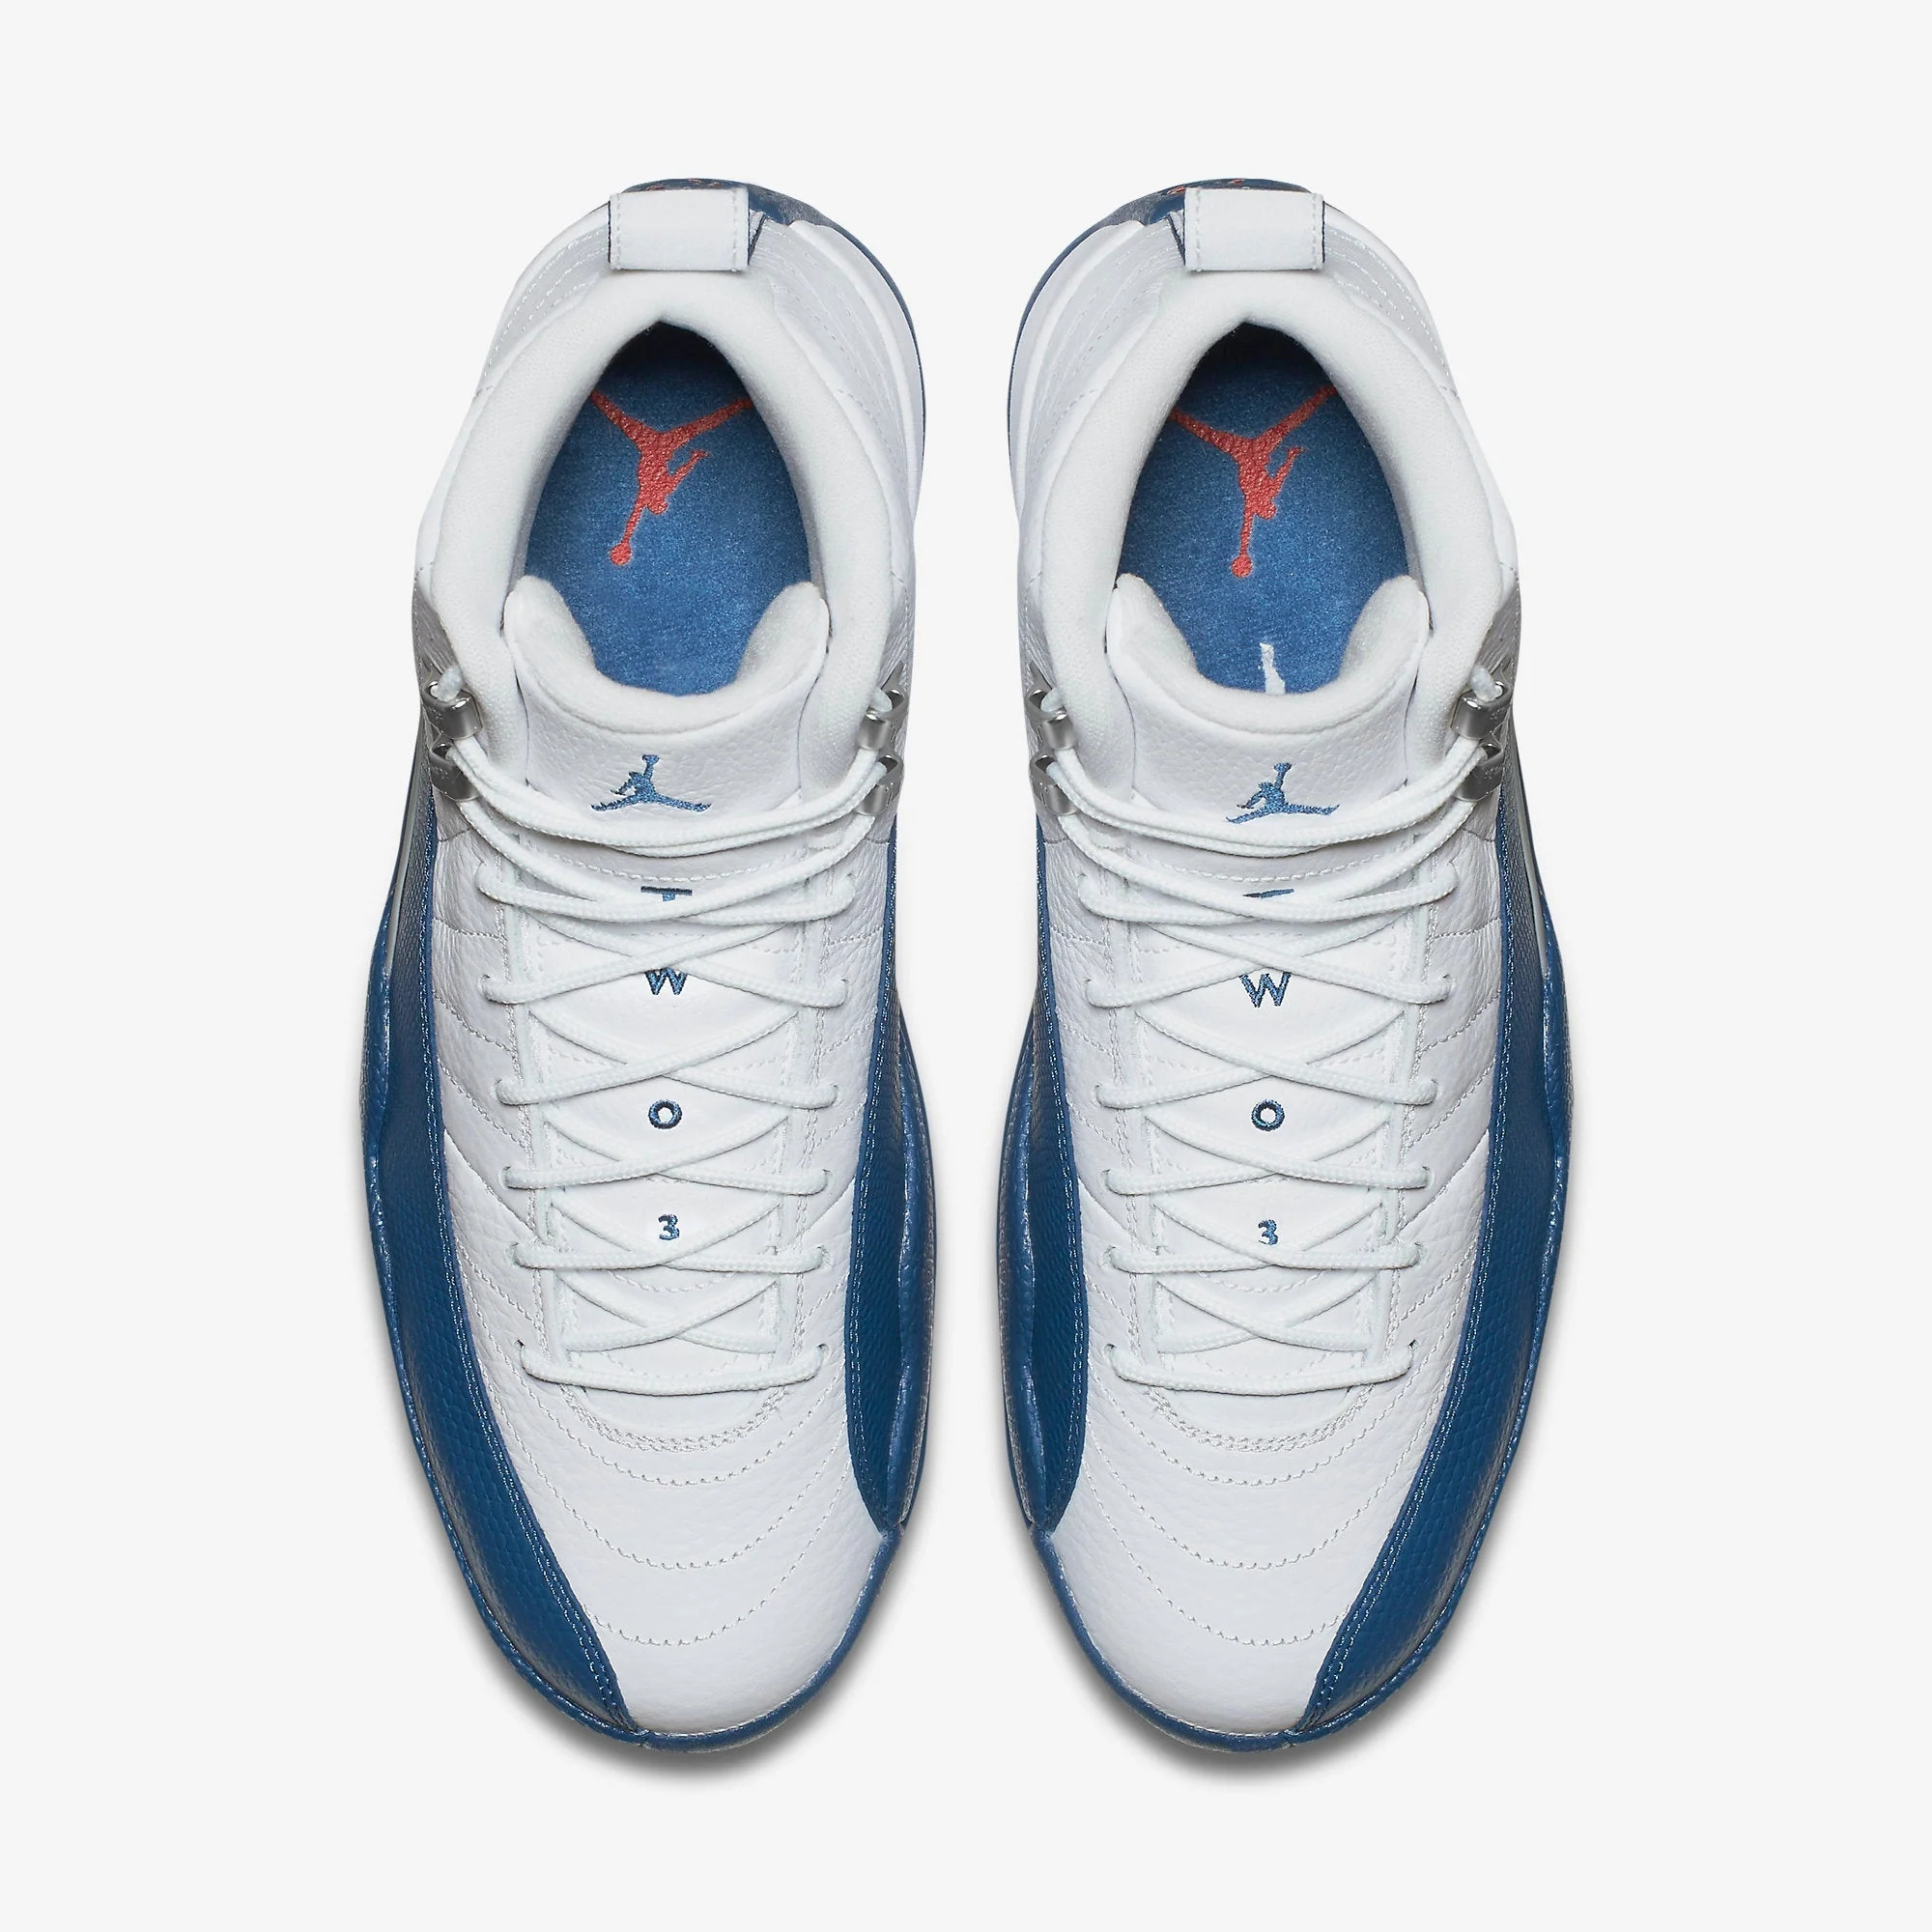 Nike Mens Air Jordan 12 Retro "French Blue" White/Metallic Silver 130690-113 - image 4 of 6